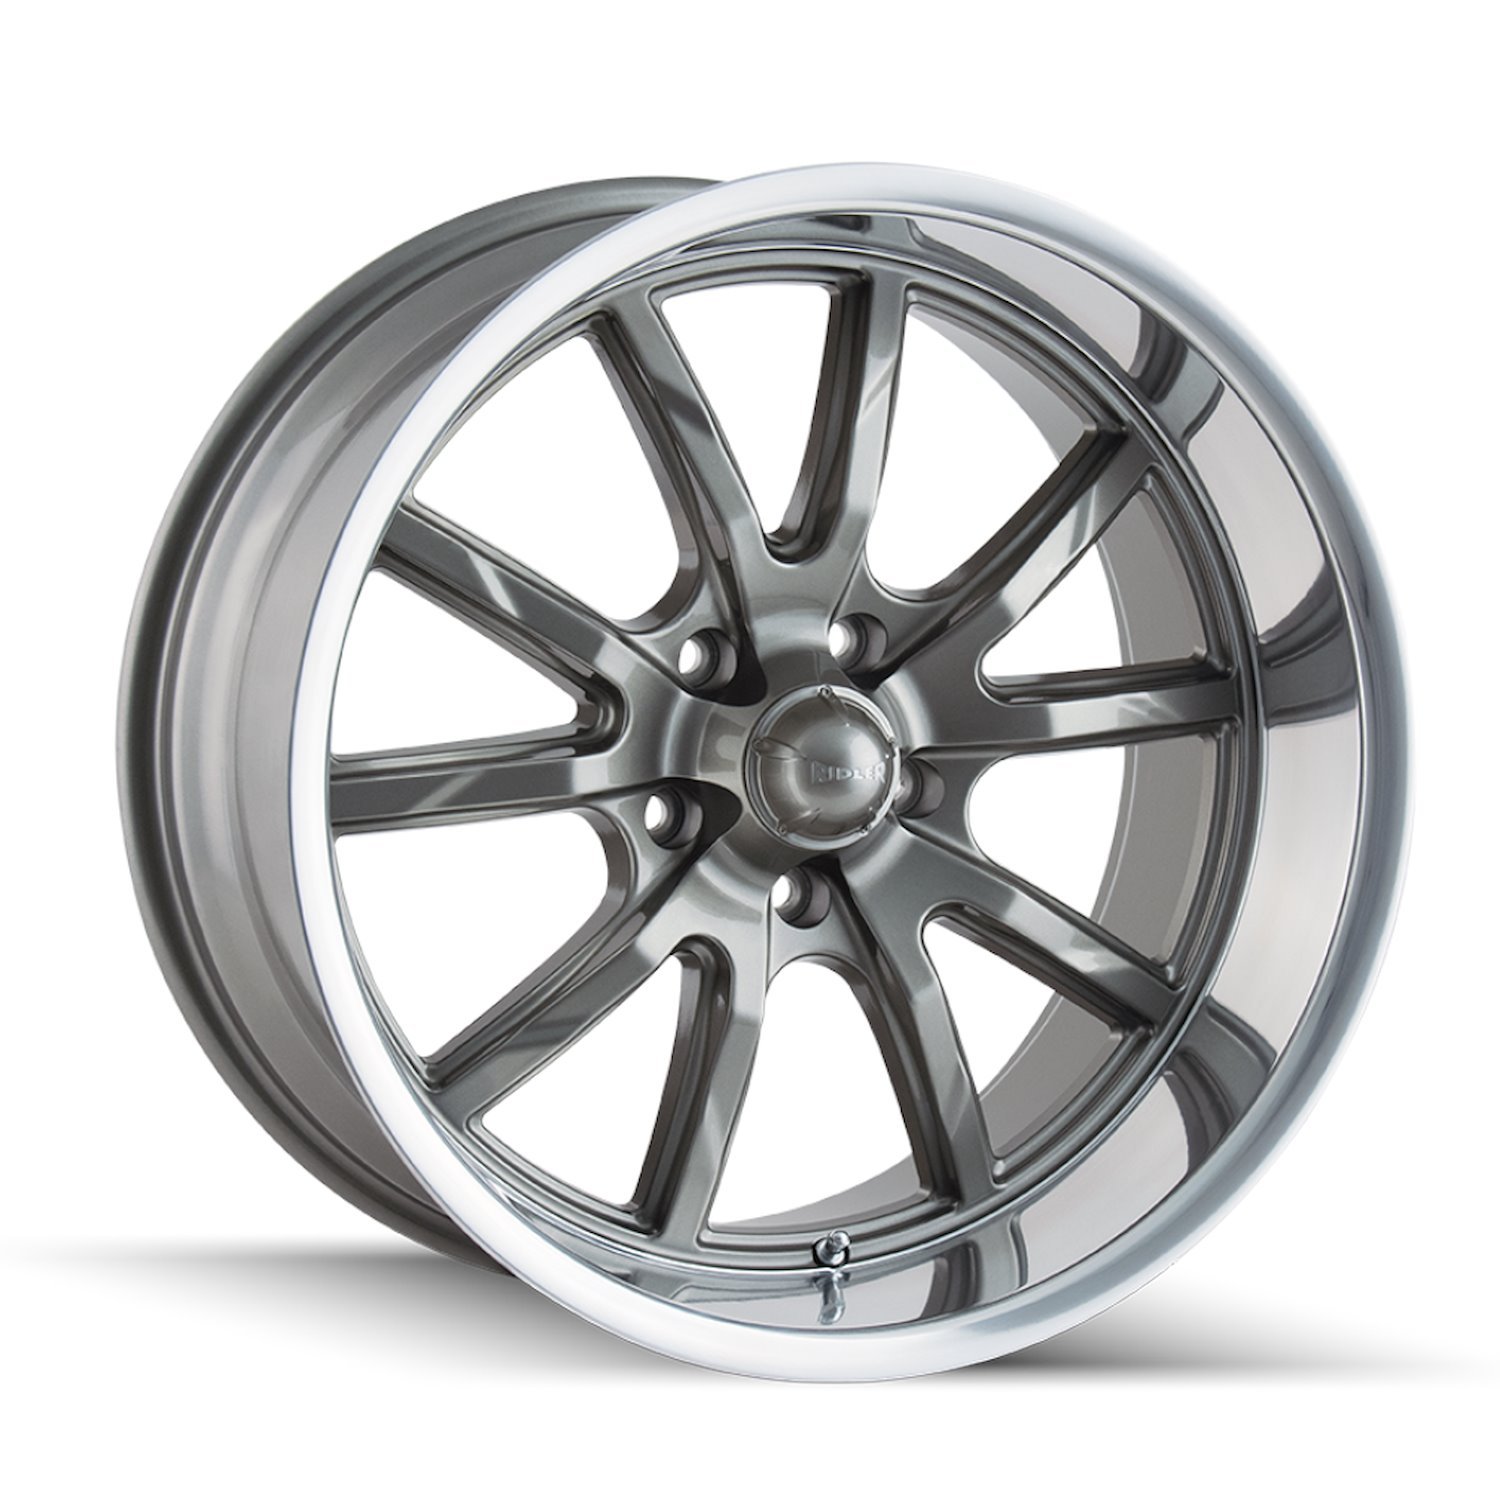 650-8961G 650-Series Wheel [Size: 18" x 9.5"] Gloss Grey Polished Finish